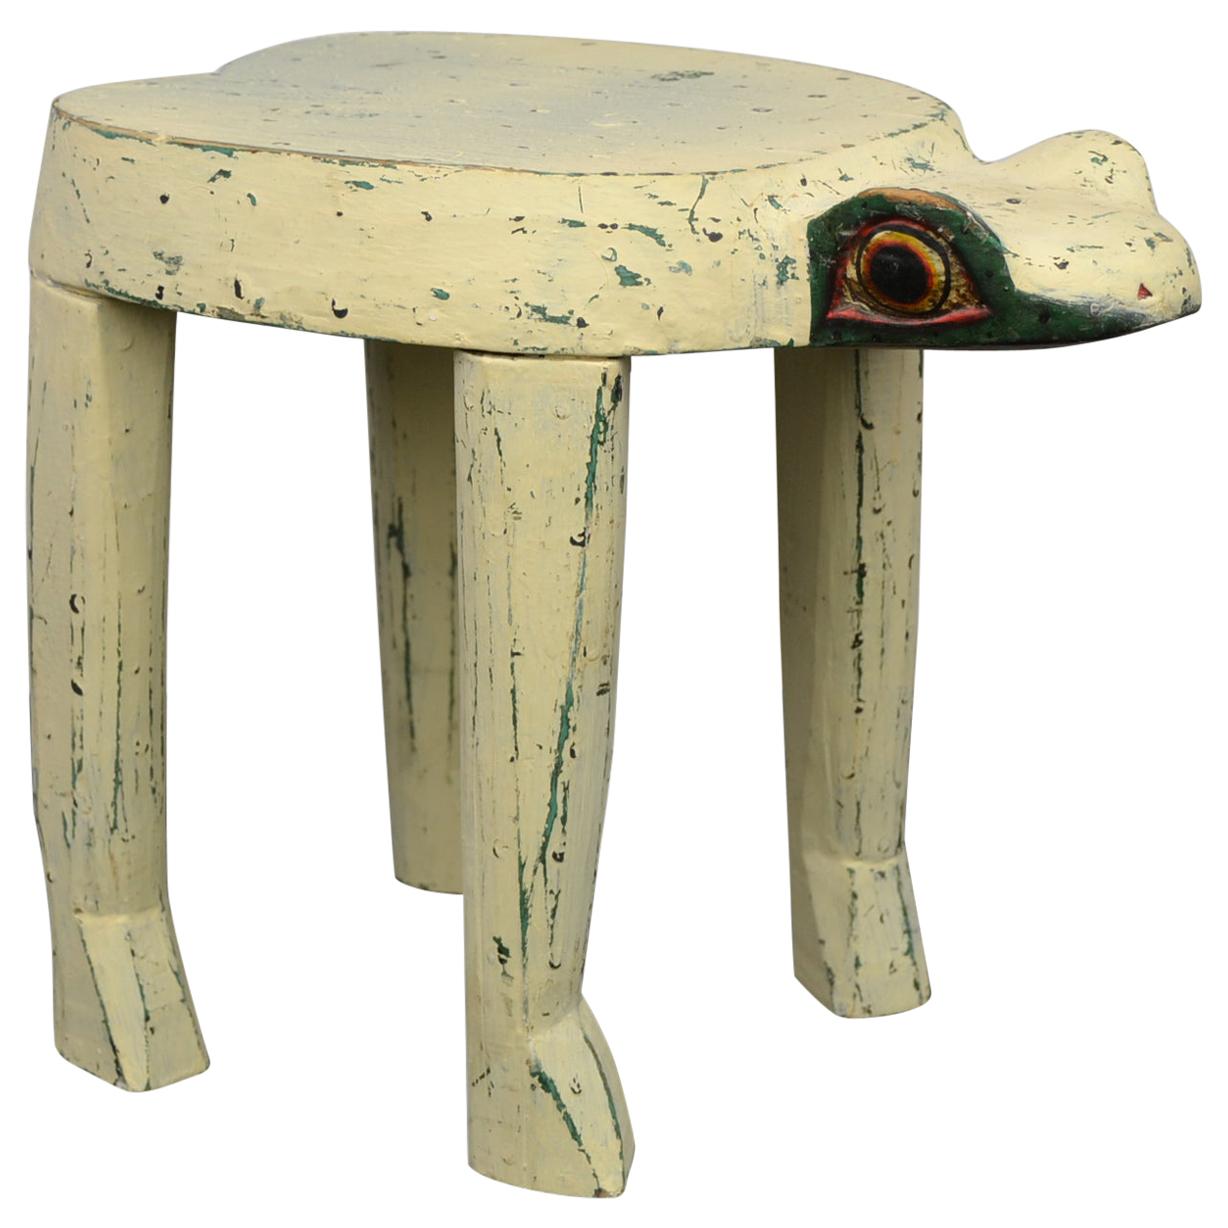 Vintage Frog Side Table or Child's Stool